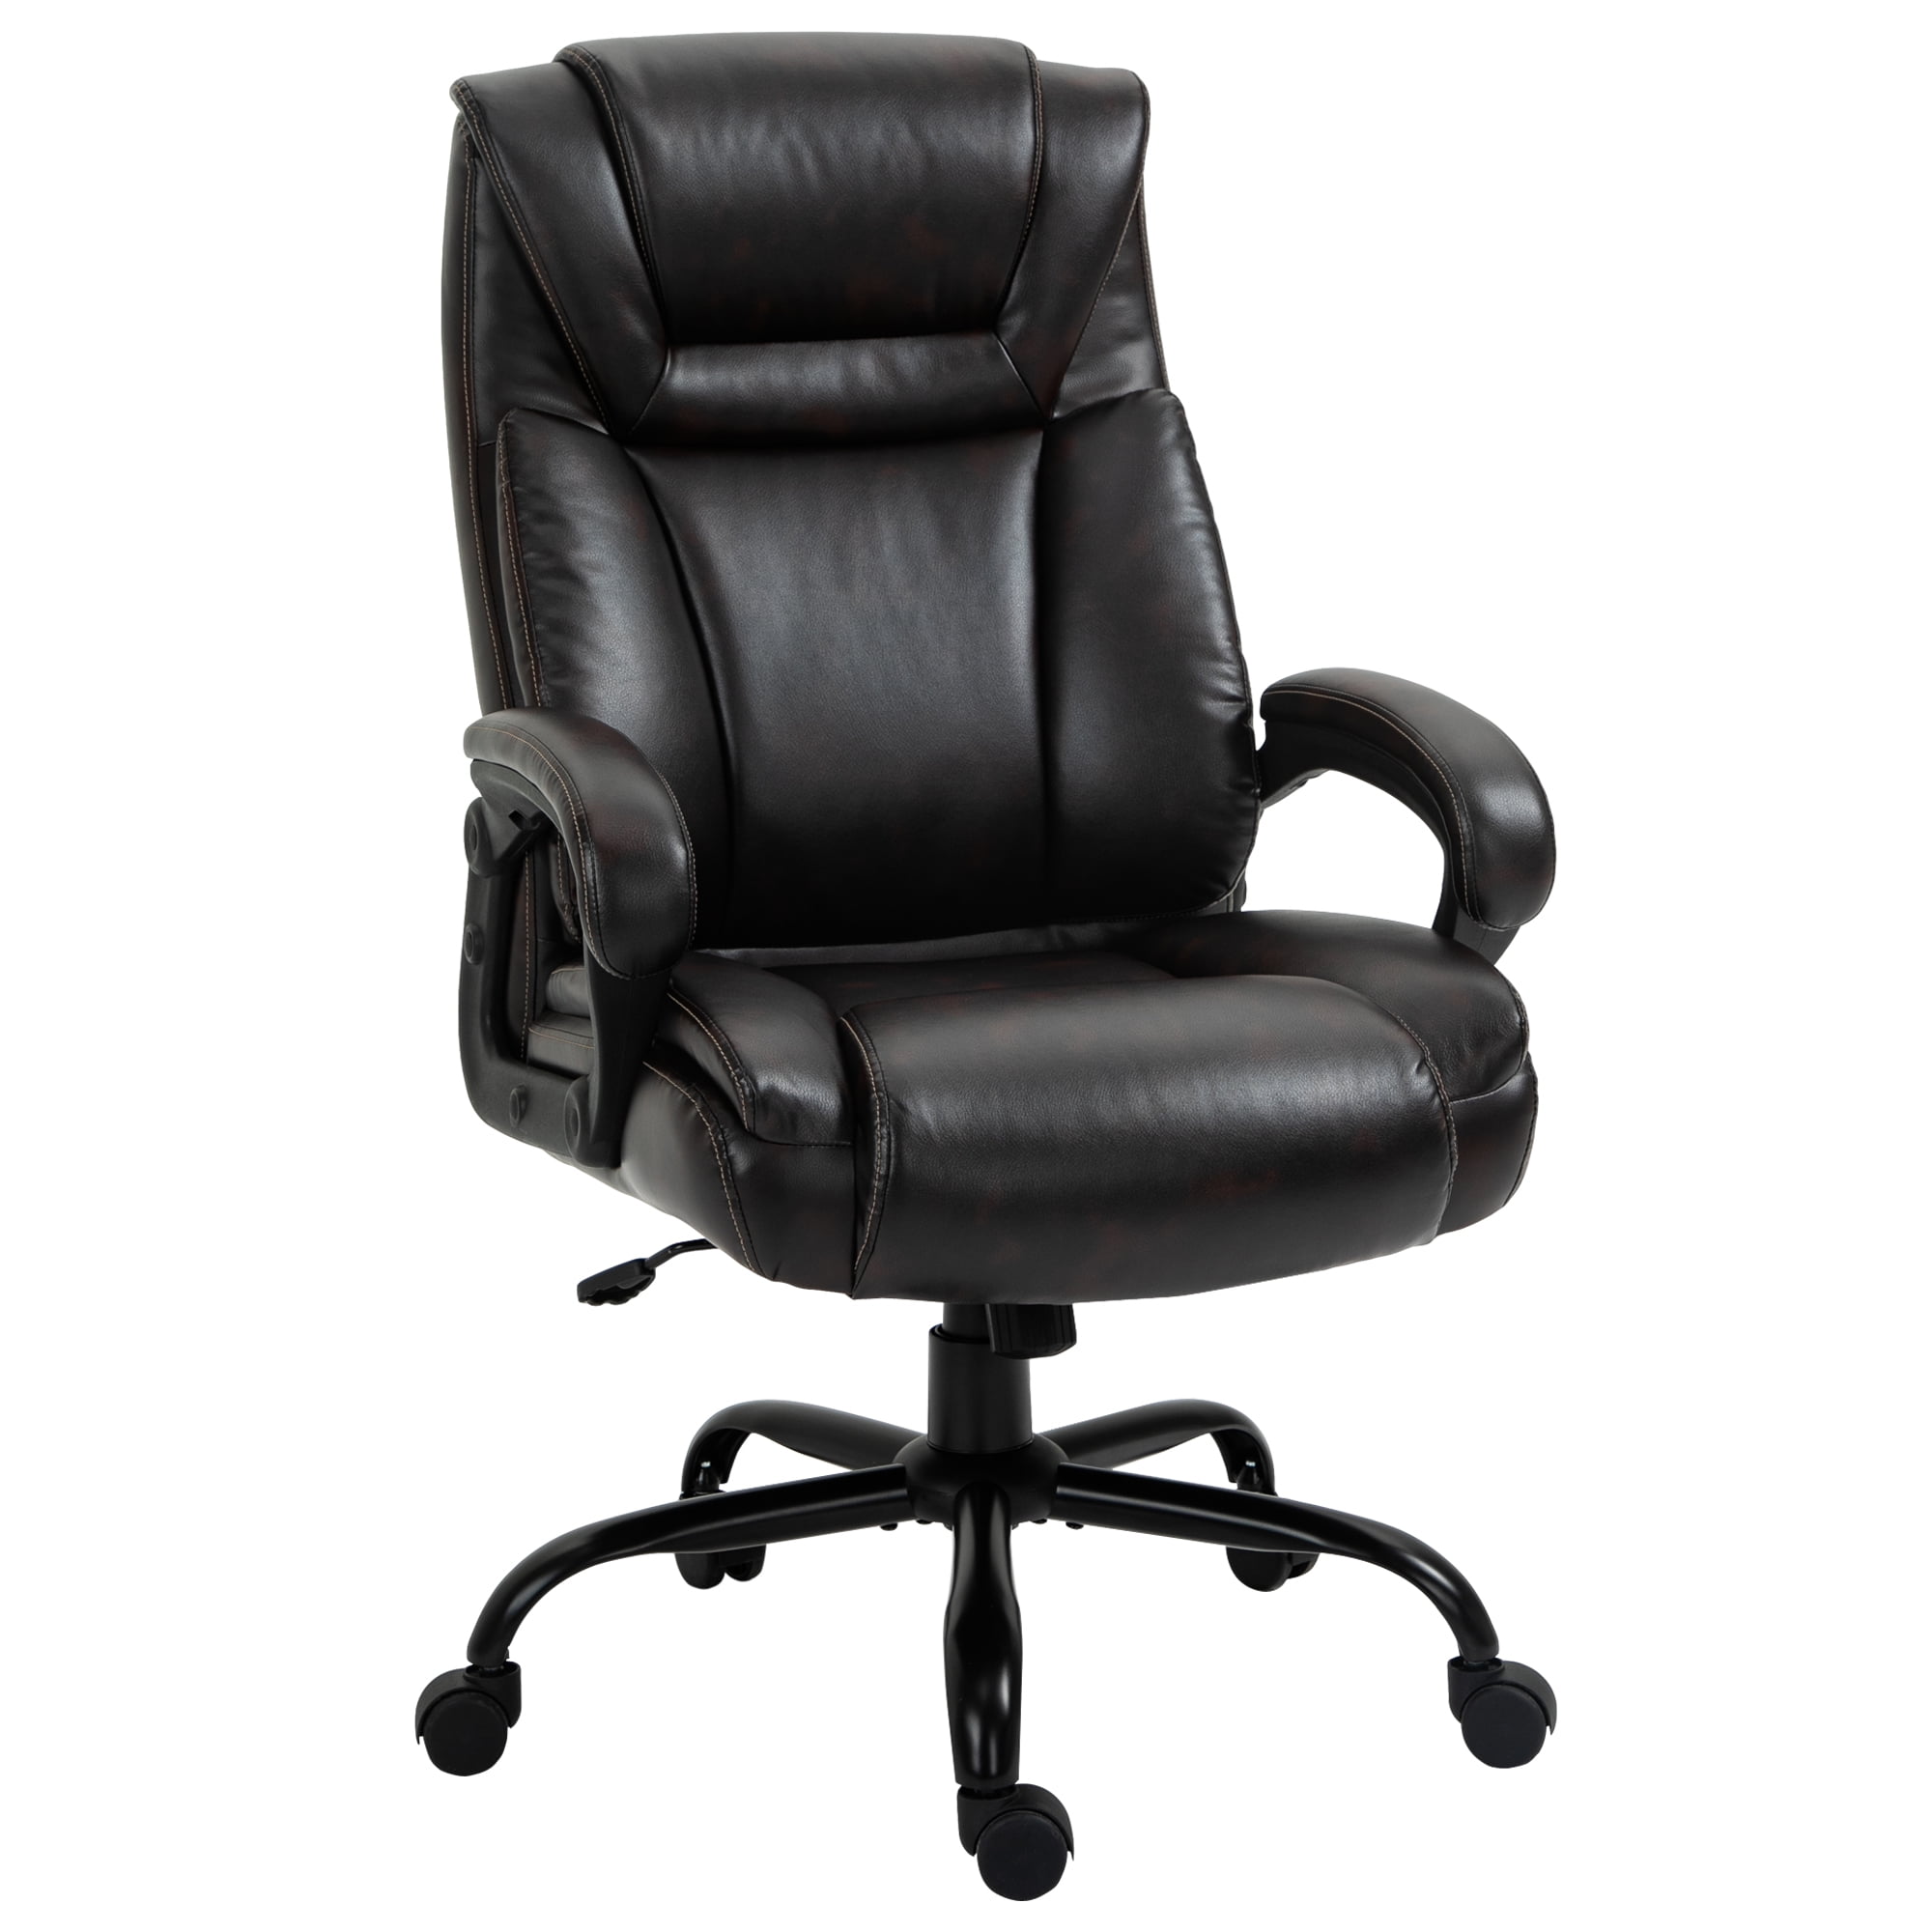 Ergonomic Swivel PU leather chair Office Executive Desk Chair High Back Big Tall 